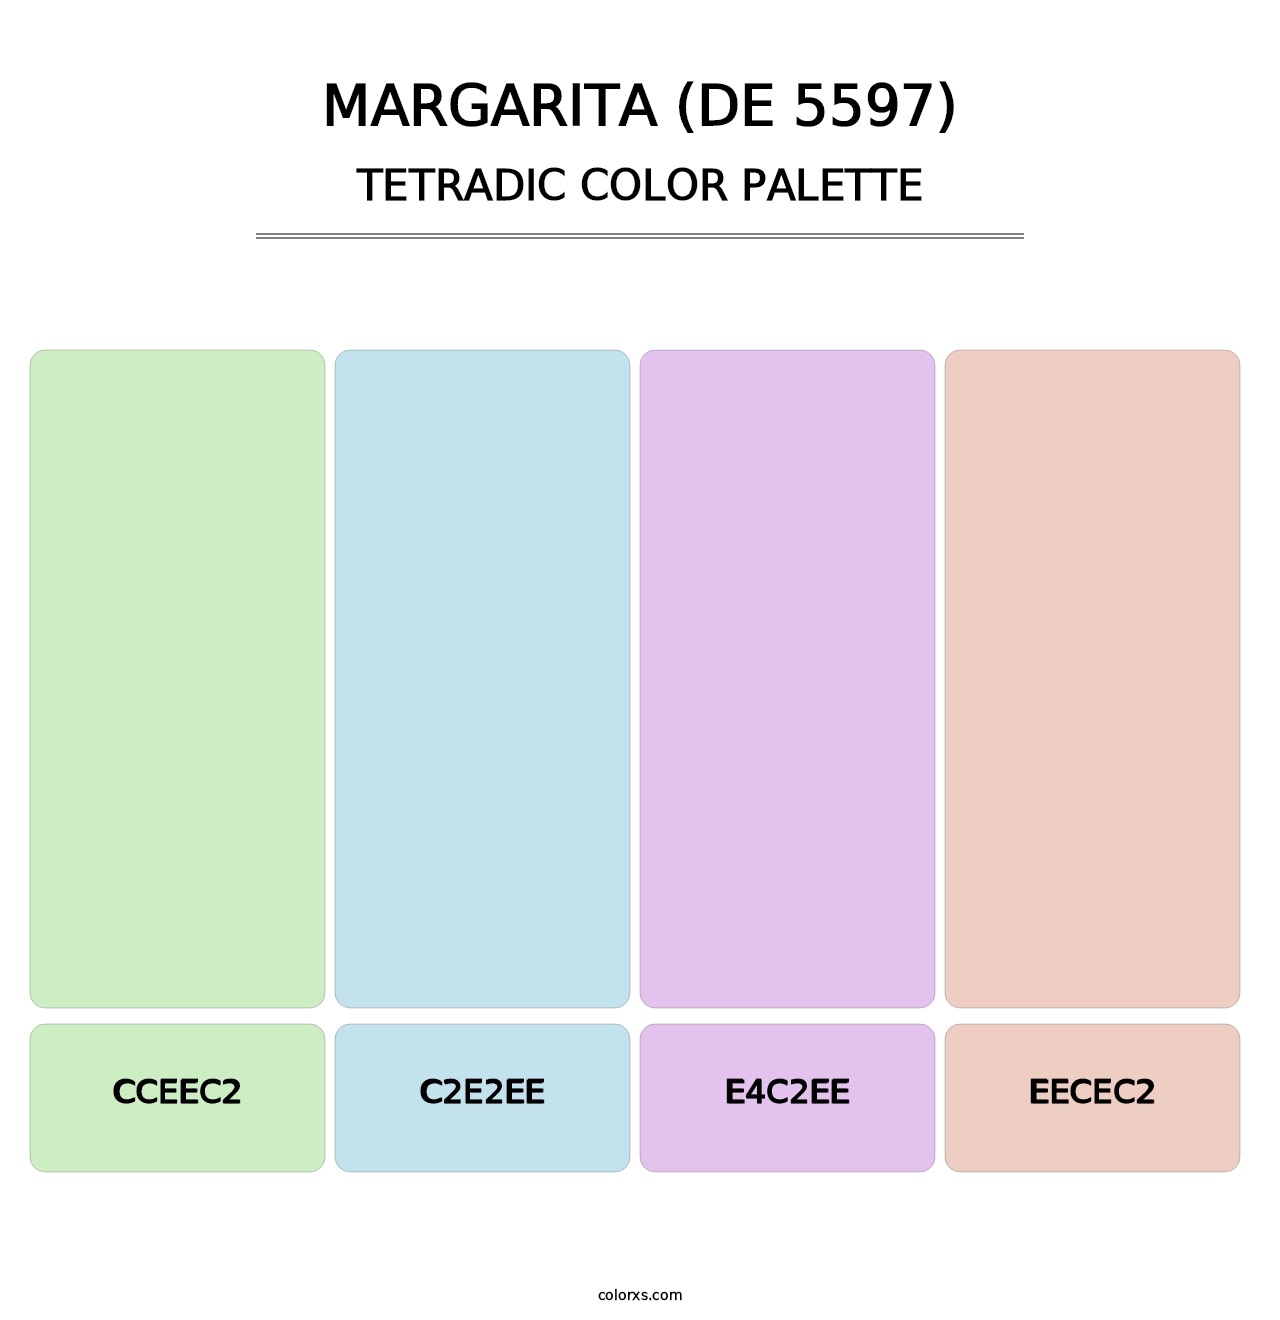 Margarita (DE 5597) - Tetradic Color Palette